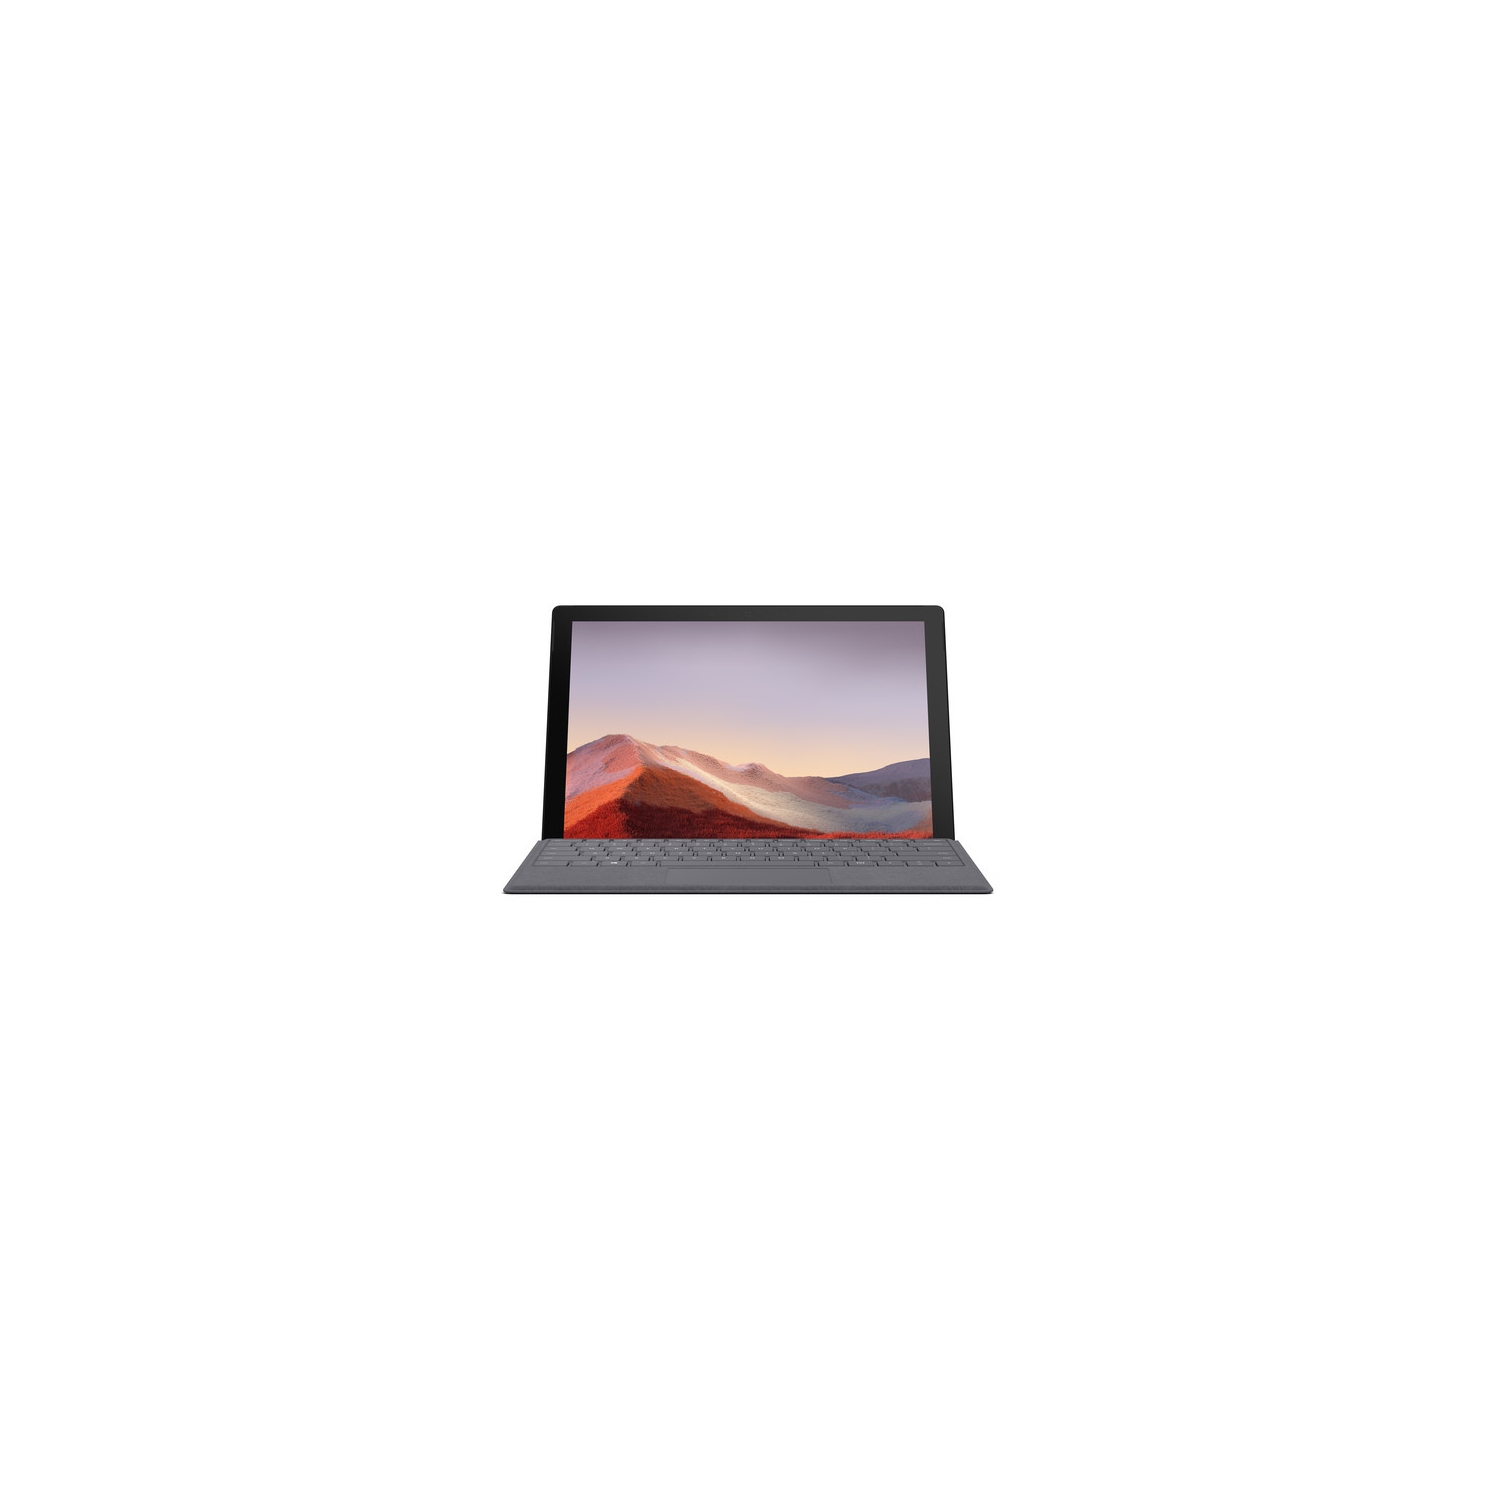 Open Box - Microsoft Surface Pro 7 12.3" Windows 10 Tablet -Matte Black (Intel Core i7/16 GB RAM/ 256 GB/ Win 10 Home)